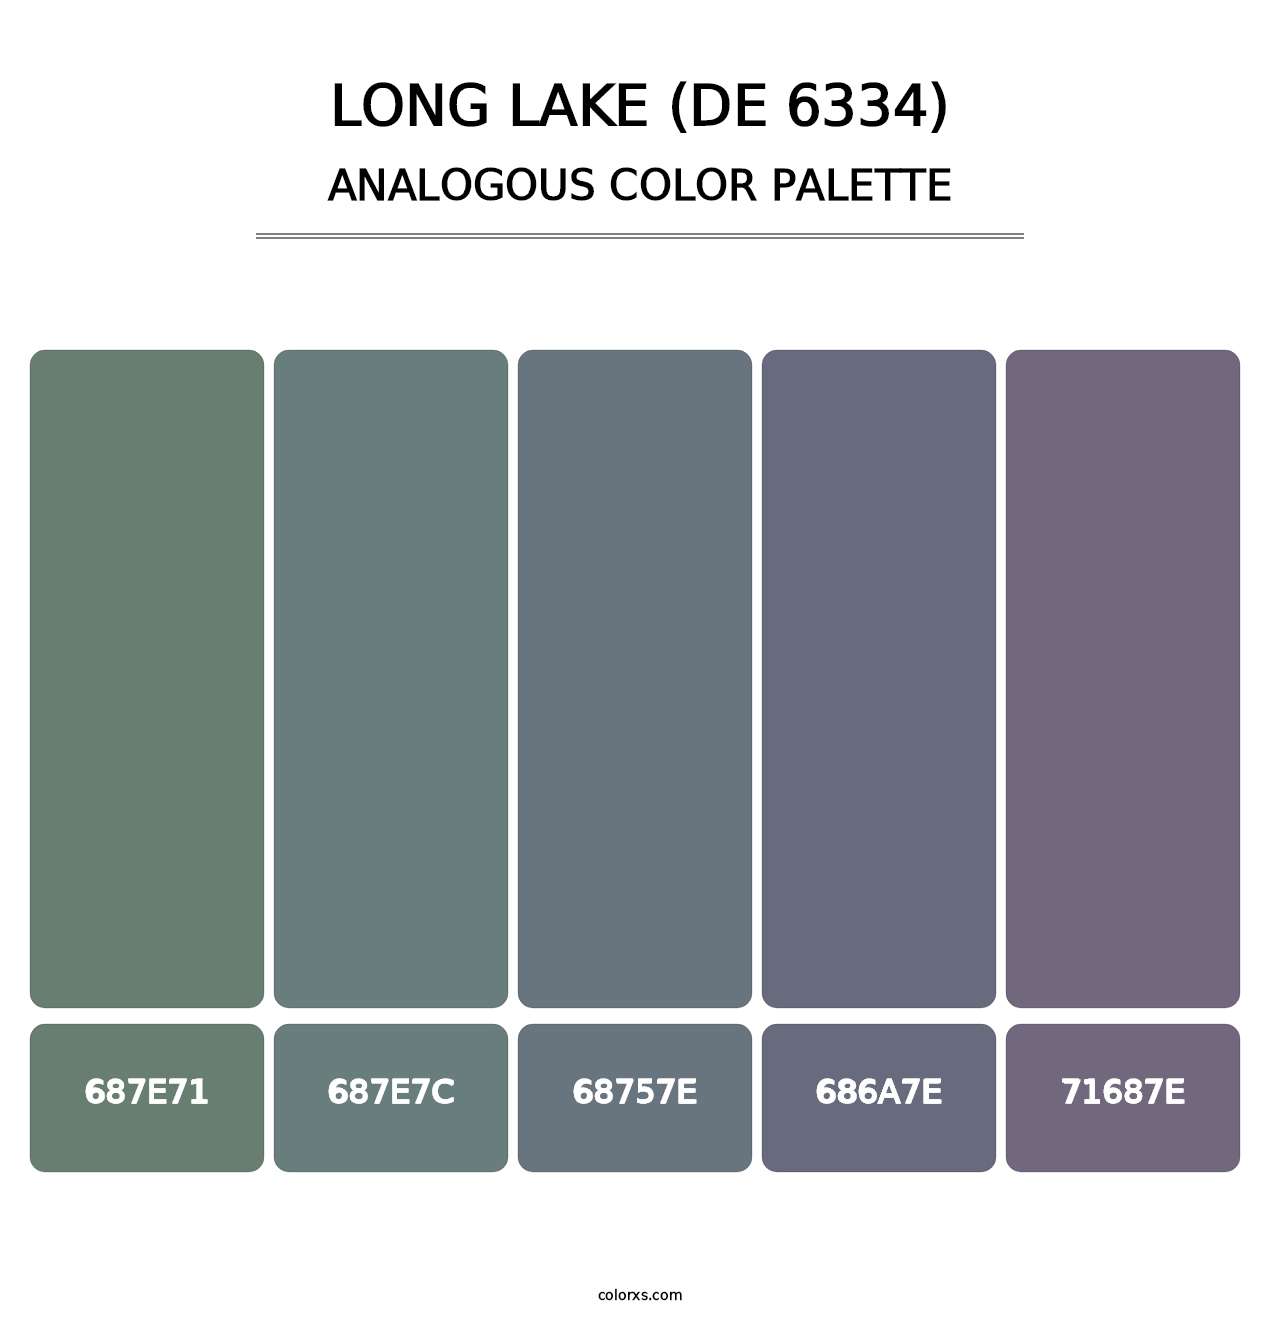 Long Lake (DE 6334) - Analogous Color Palette